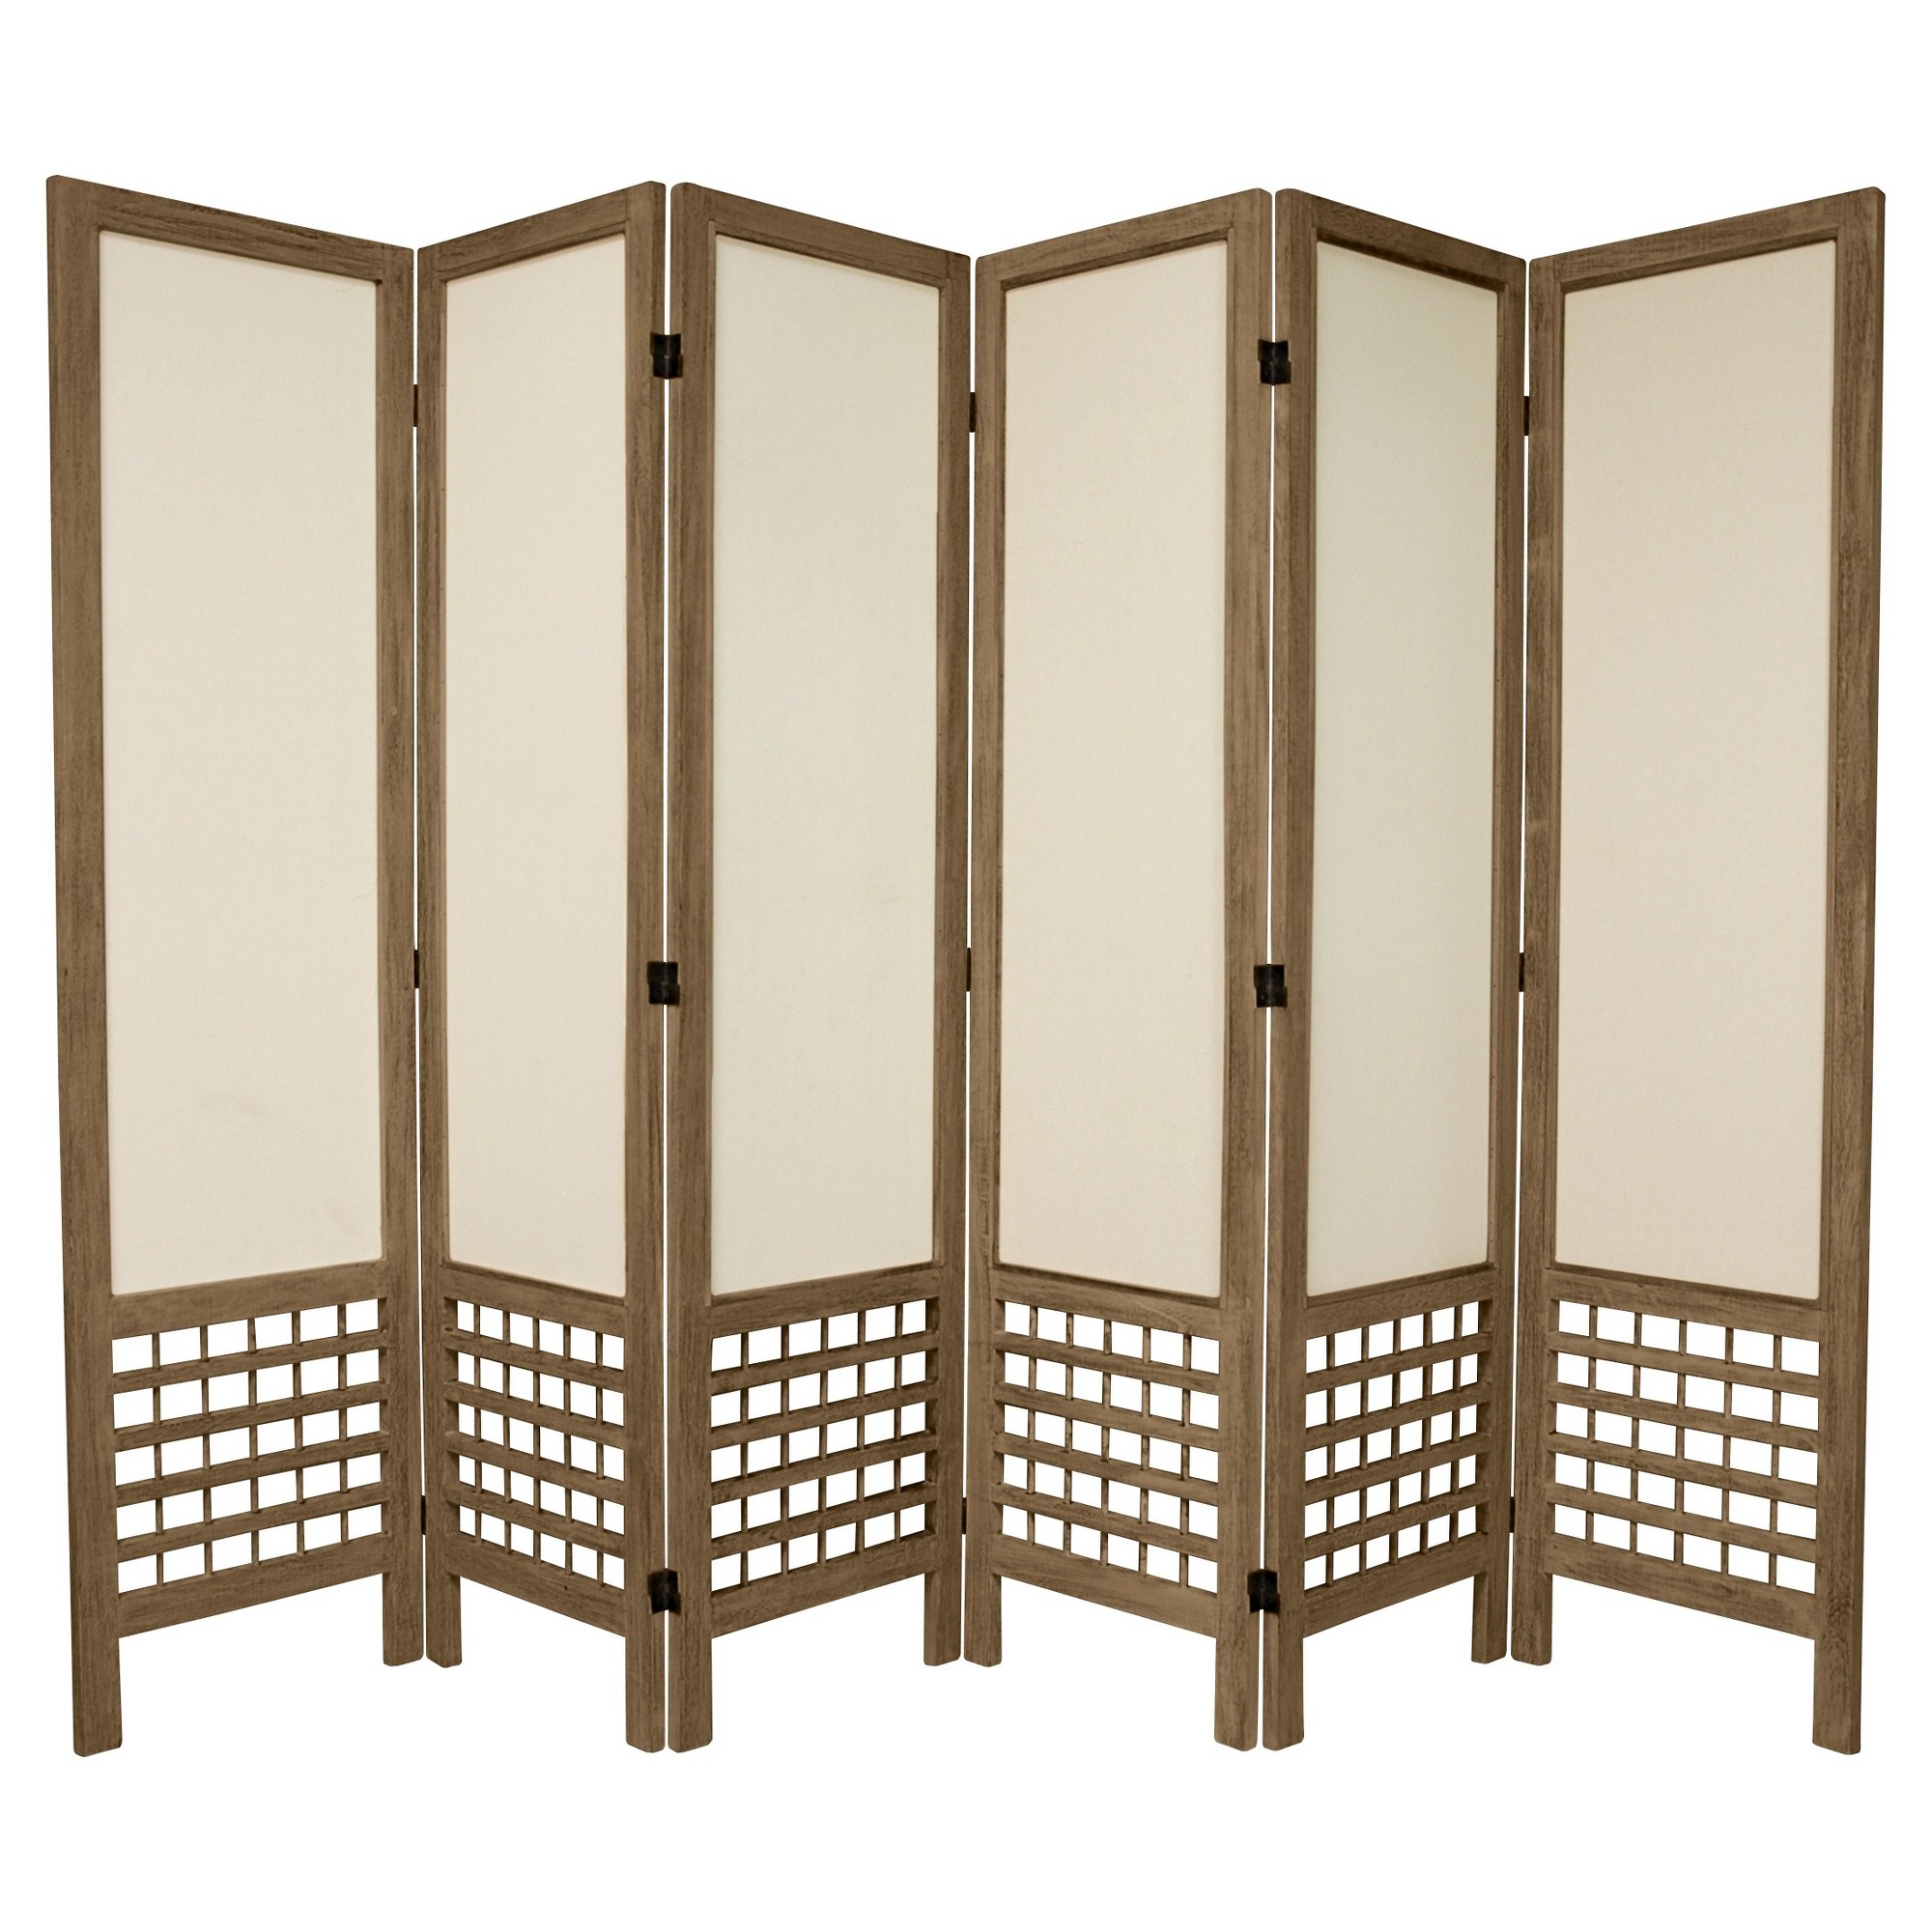 Wood divider panels